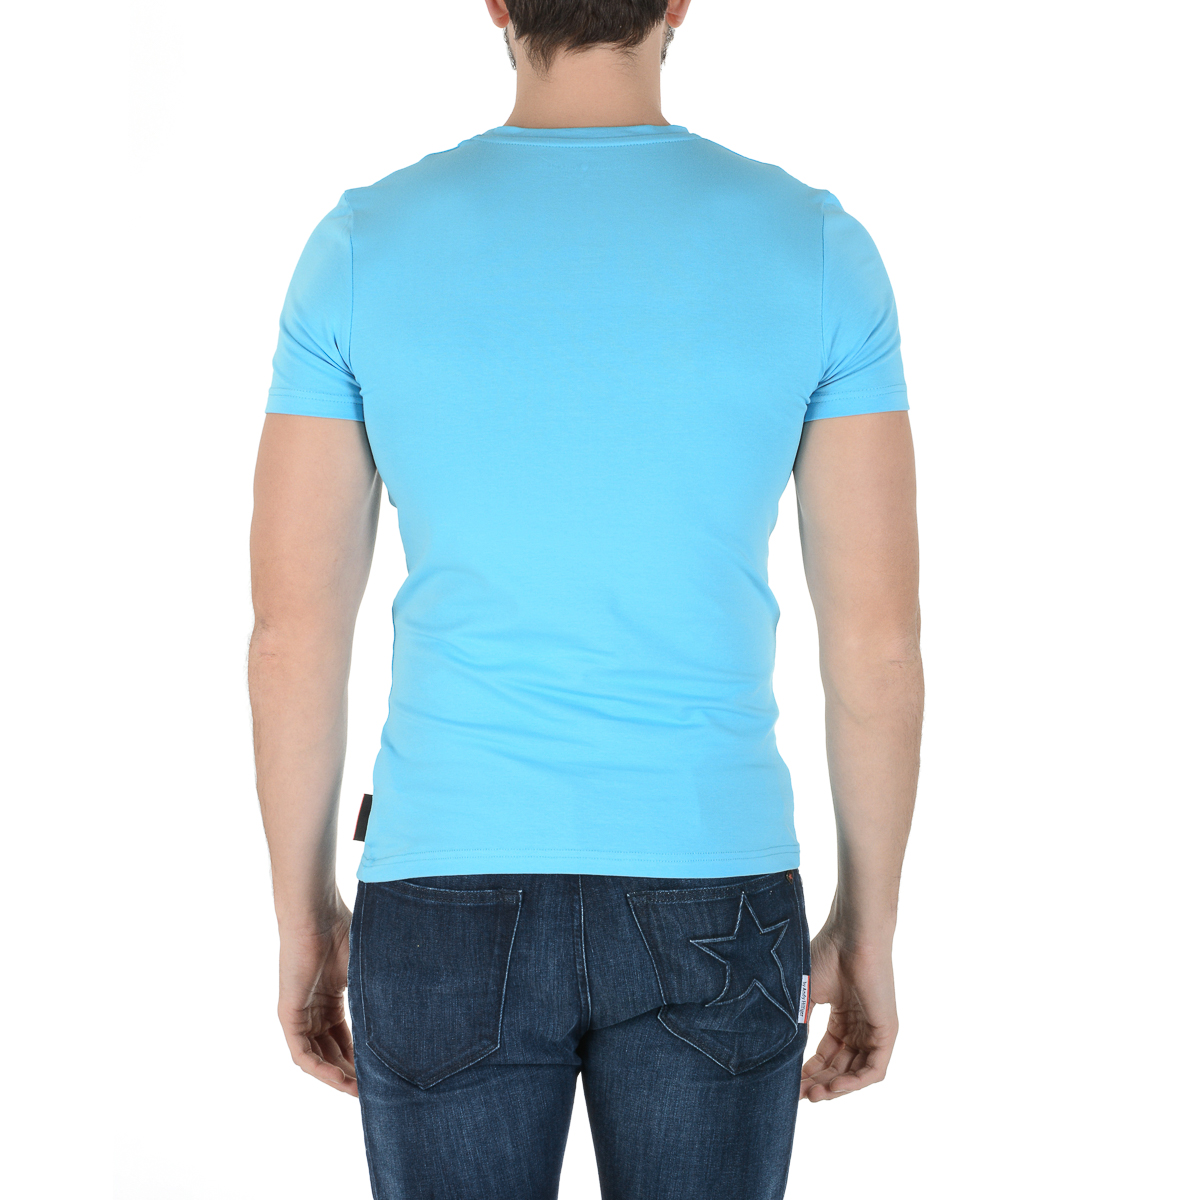 Andrew Charles Mens T-Shirt Short Sleeves Round Neck Light Blue KEITA